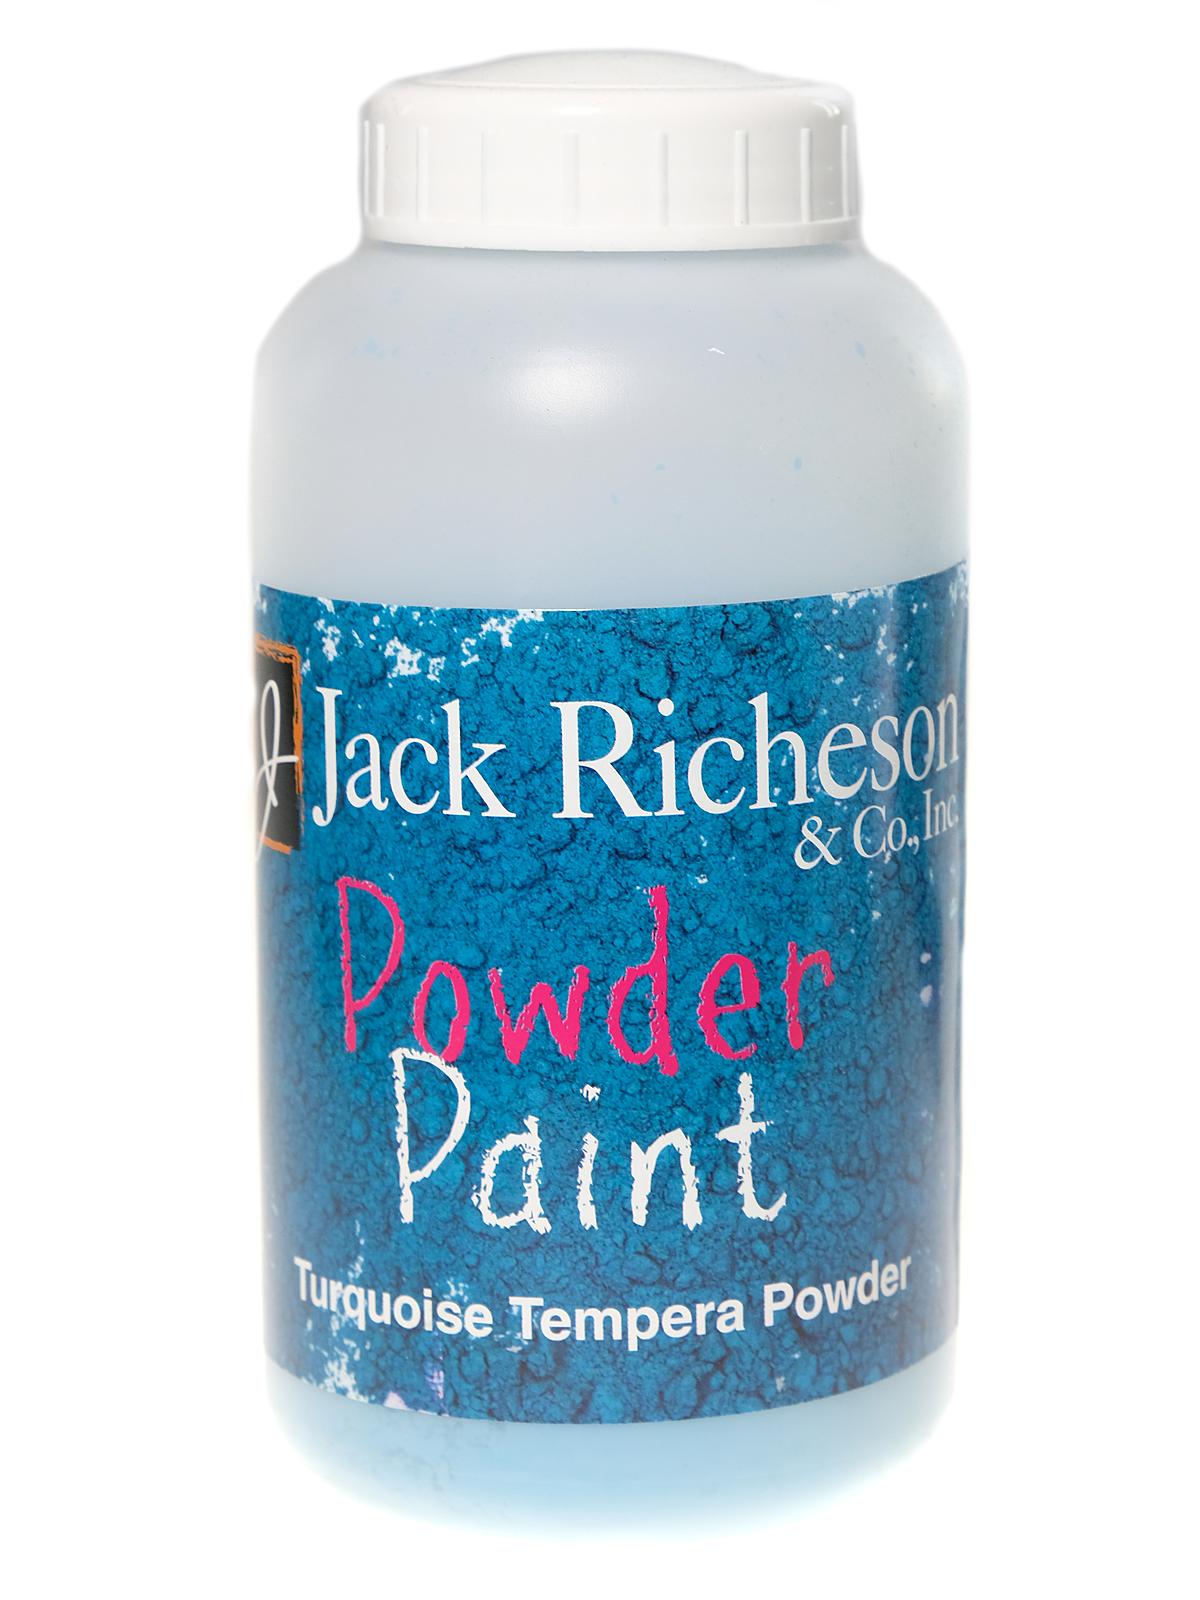 Powder Tempera Paint Turquoise 16 Oz. Jar